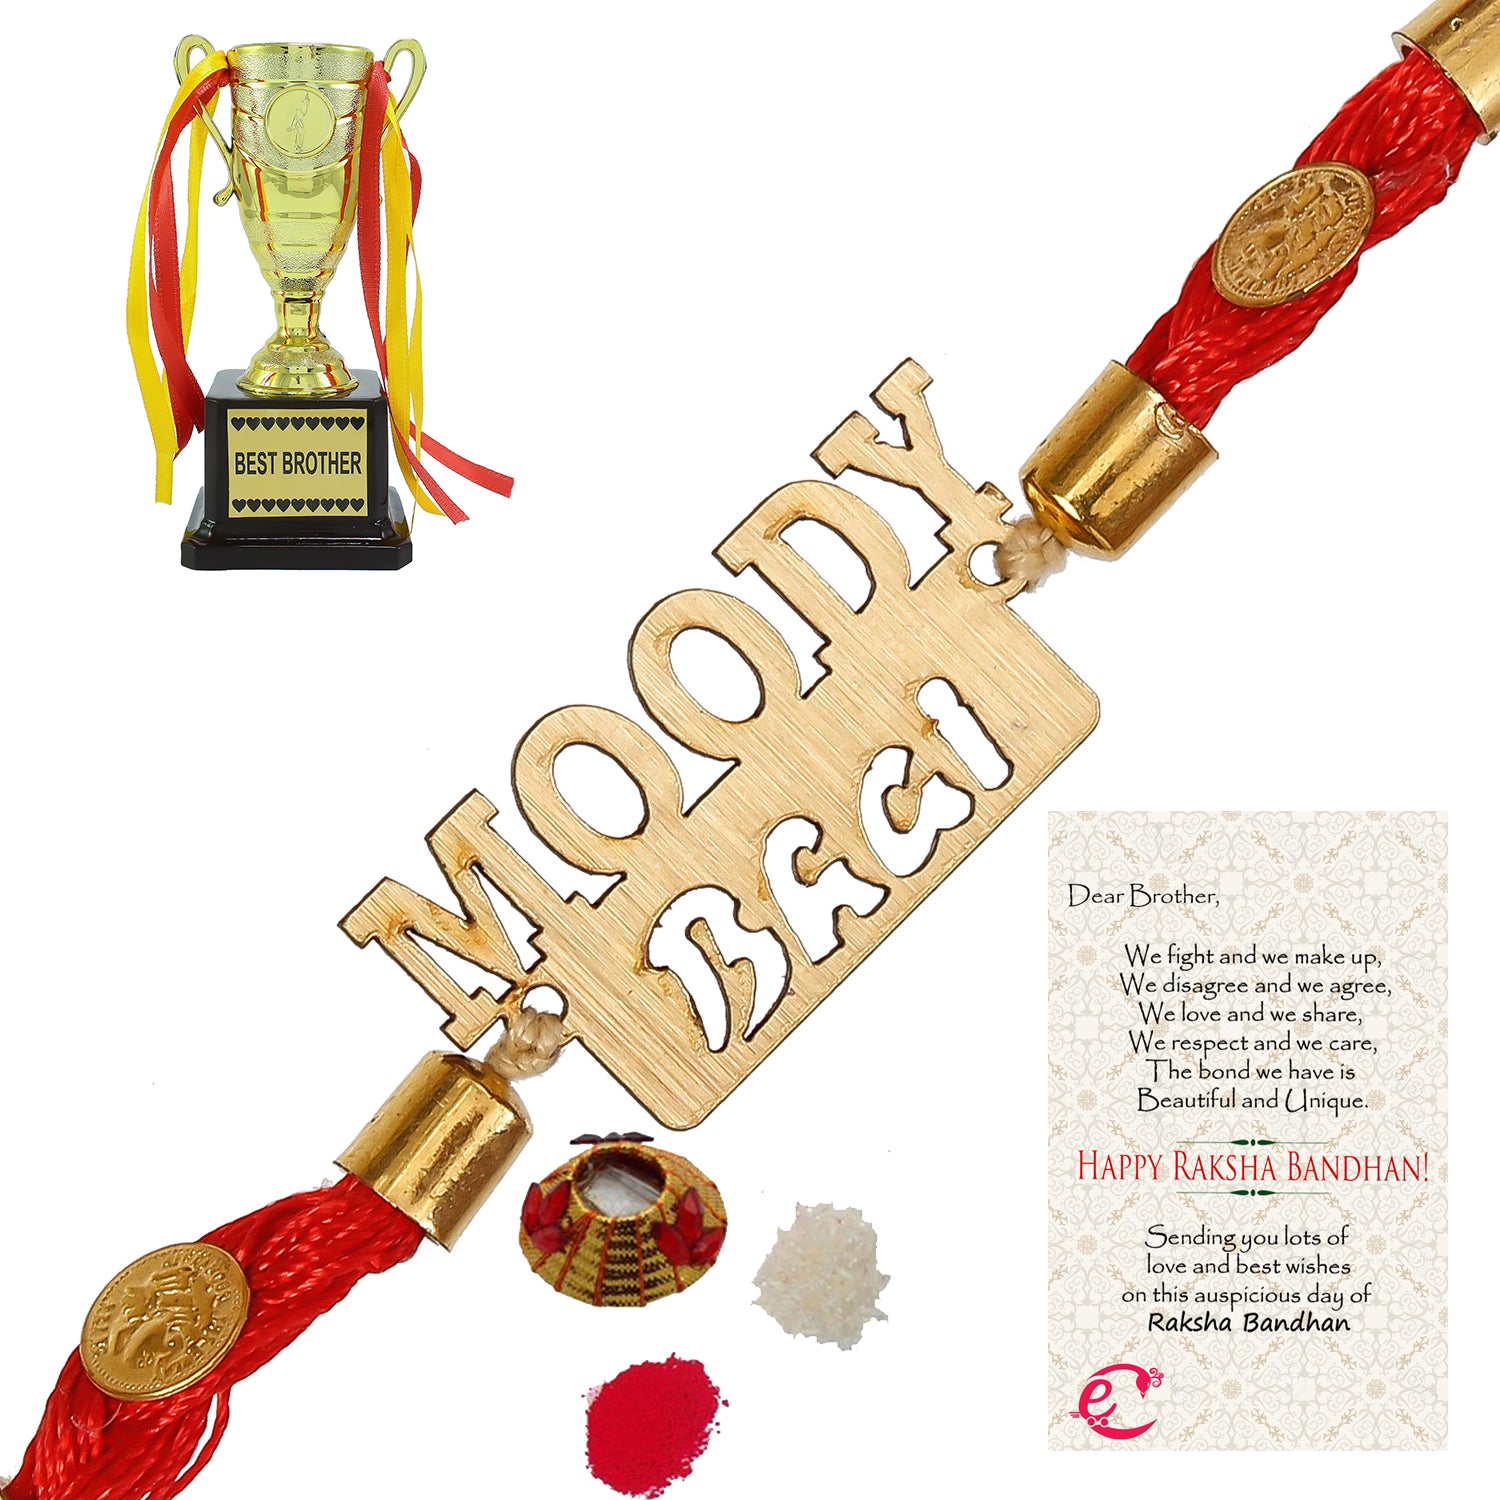 Designer Wooden Moddy Bhai Rakhi with Best Brother Trophy and Roli Tikka Matki, Best Wishes Greeting Card